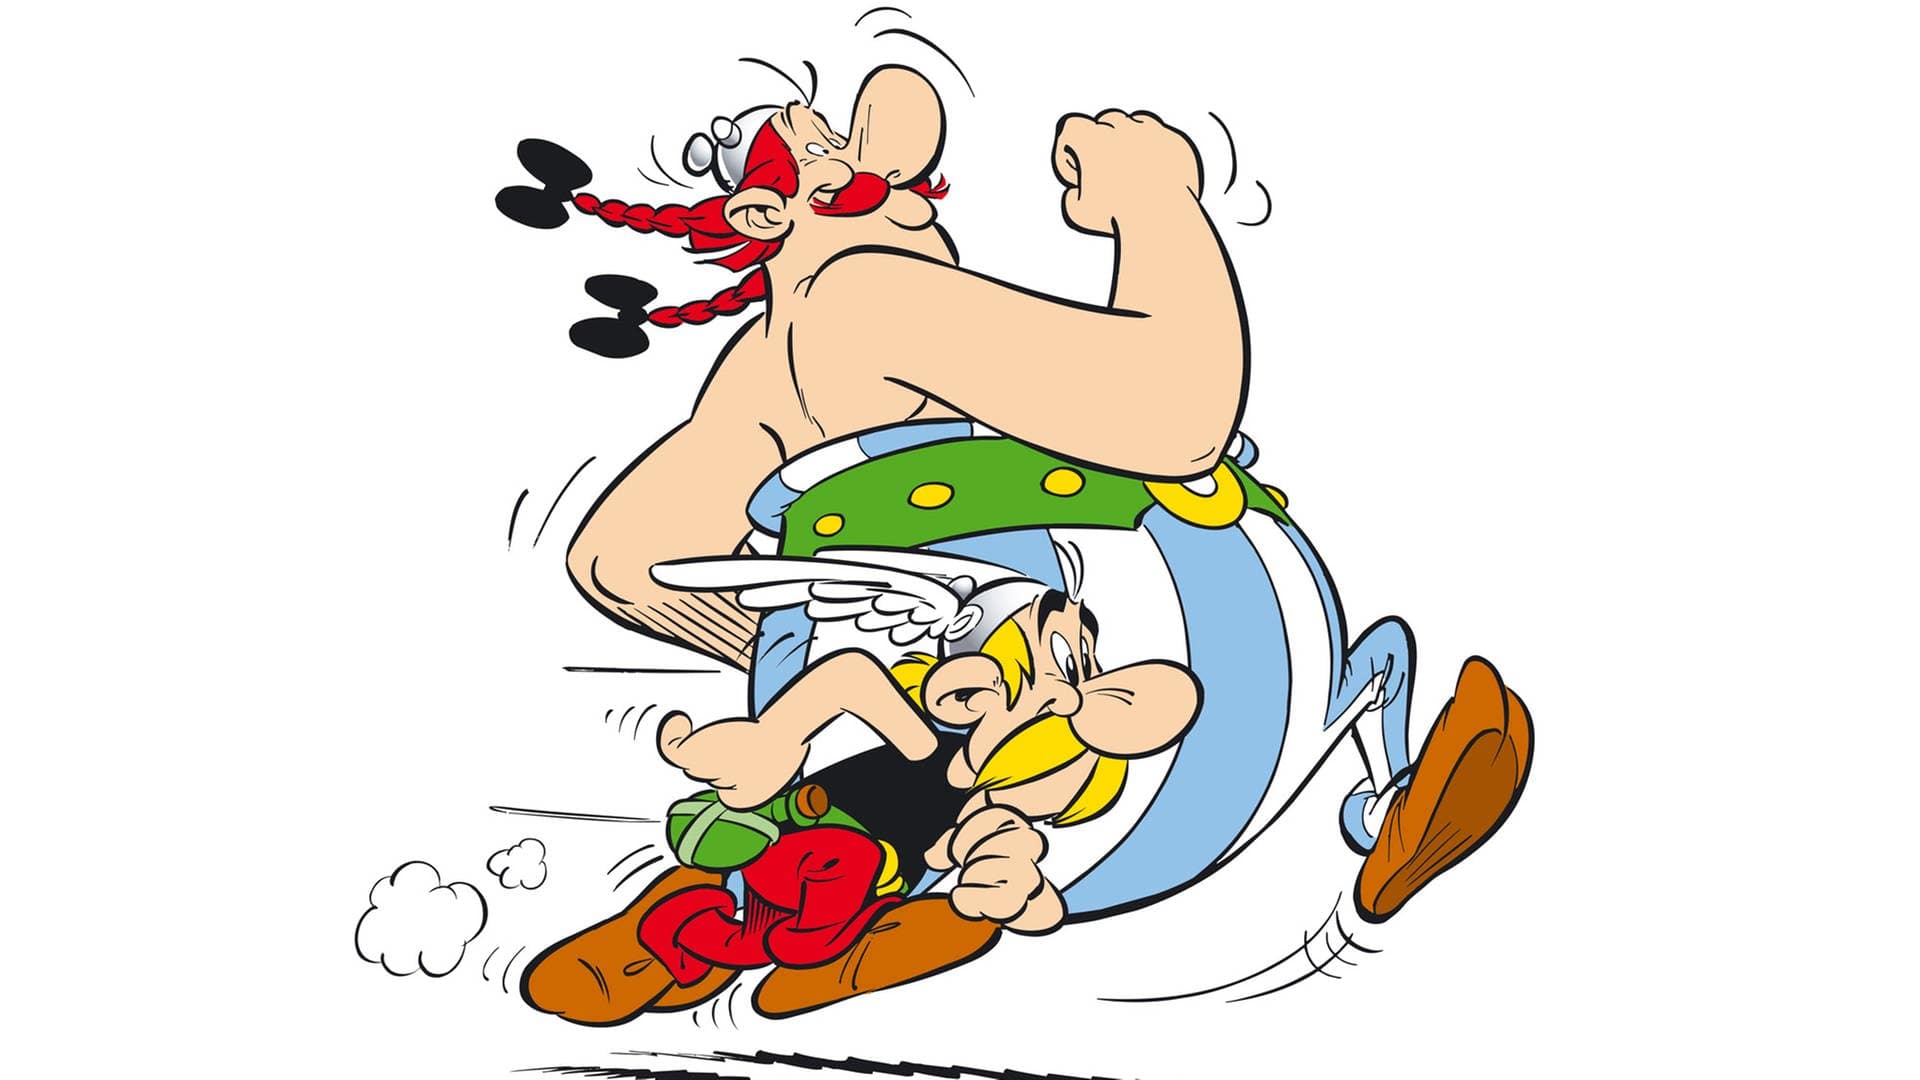 Szenen aus dem Comisc Asterix und Obelix